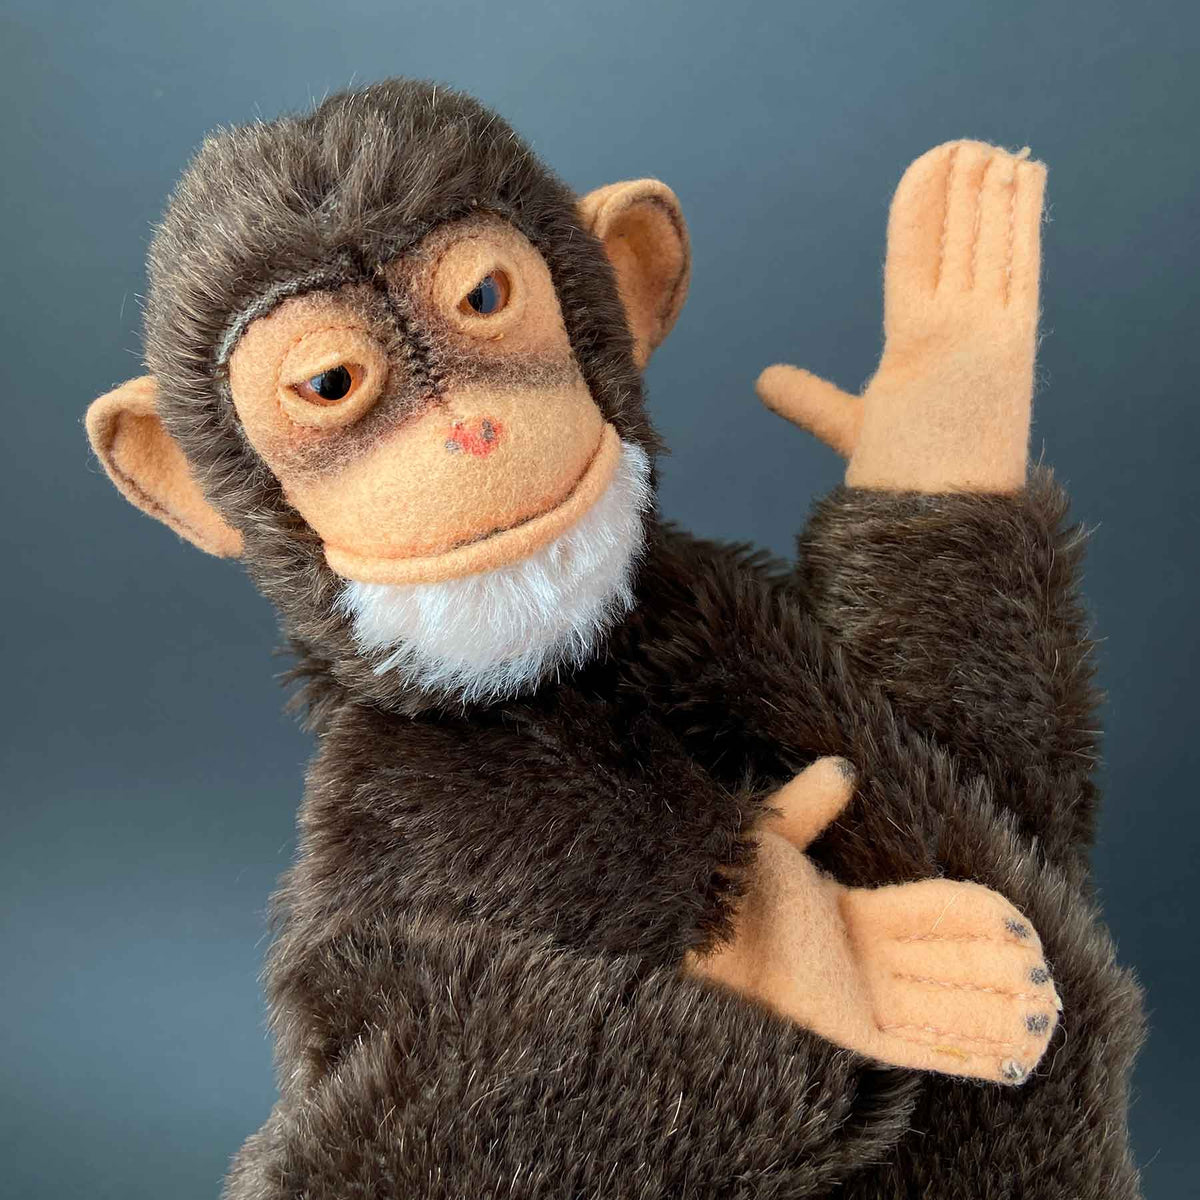 Monkey Hand Puppet